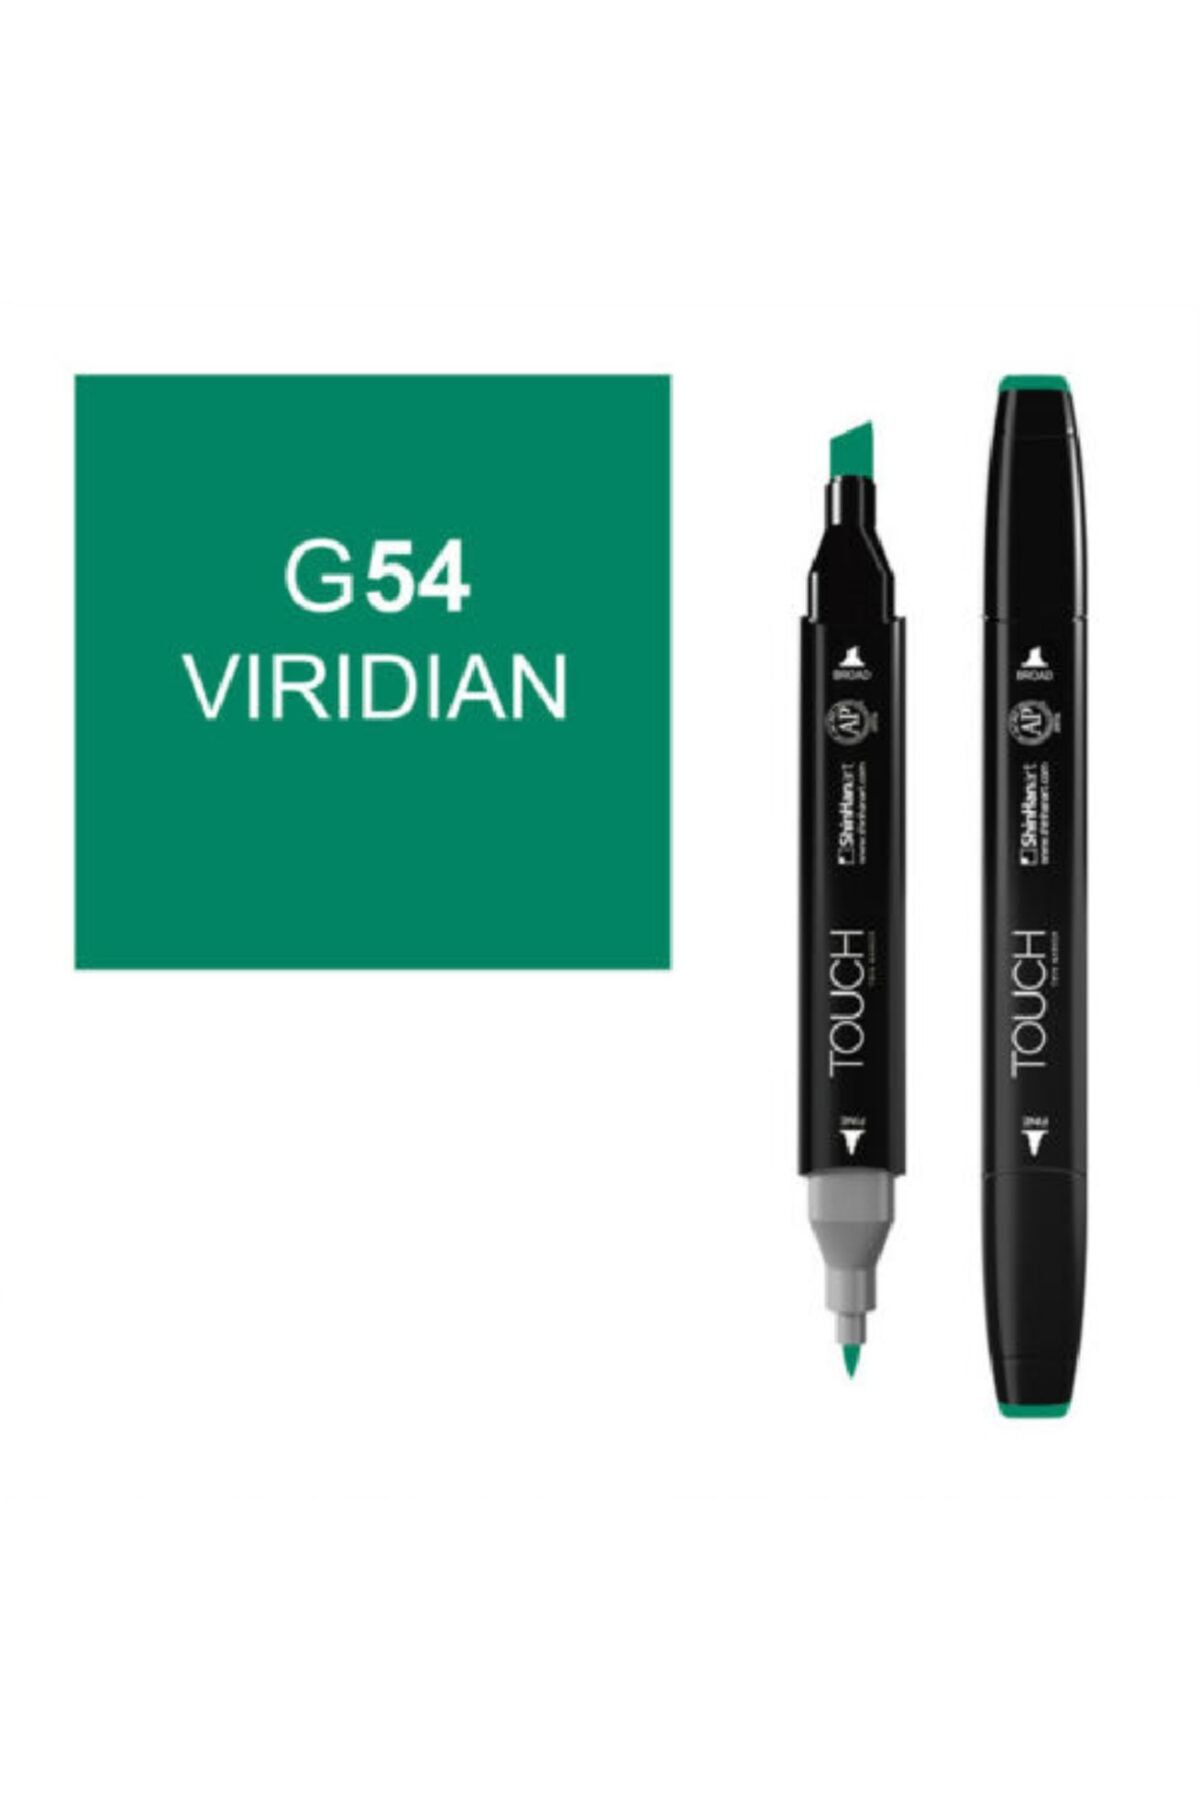 Ponart Touch Twin G54 Viridian Marker Sh1110054